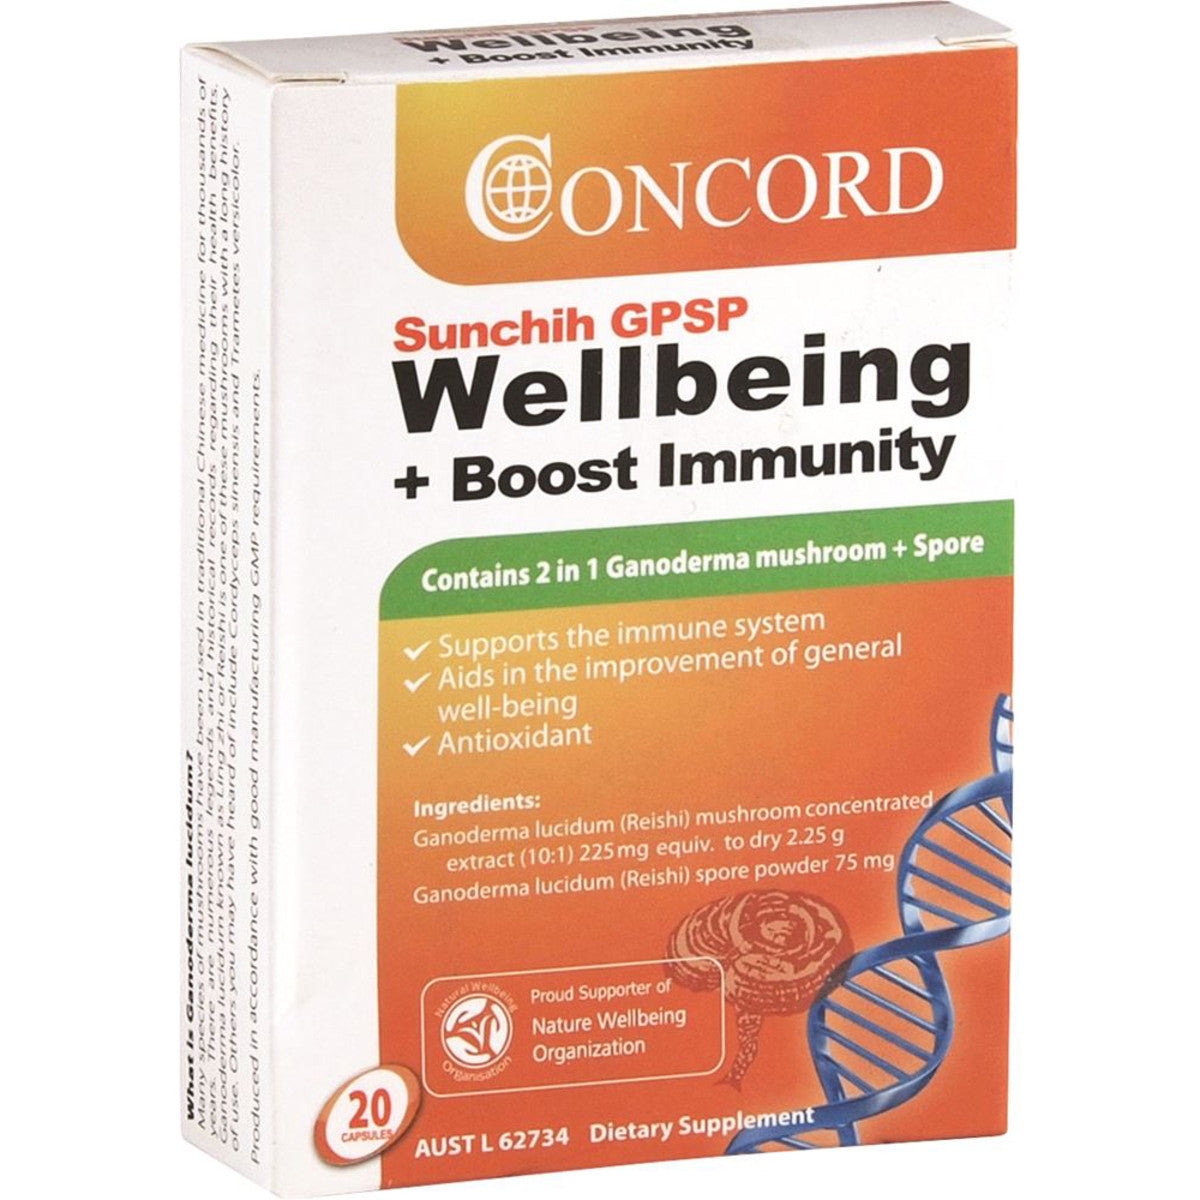 Concord - Sunchih GPSP Wellbeing Boost Immunity